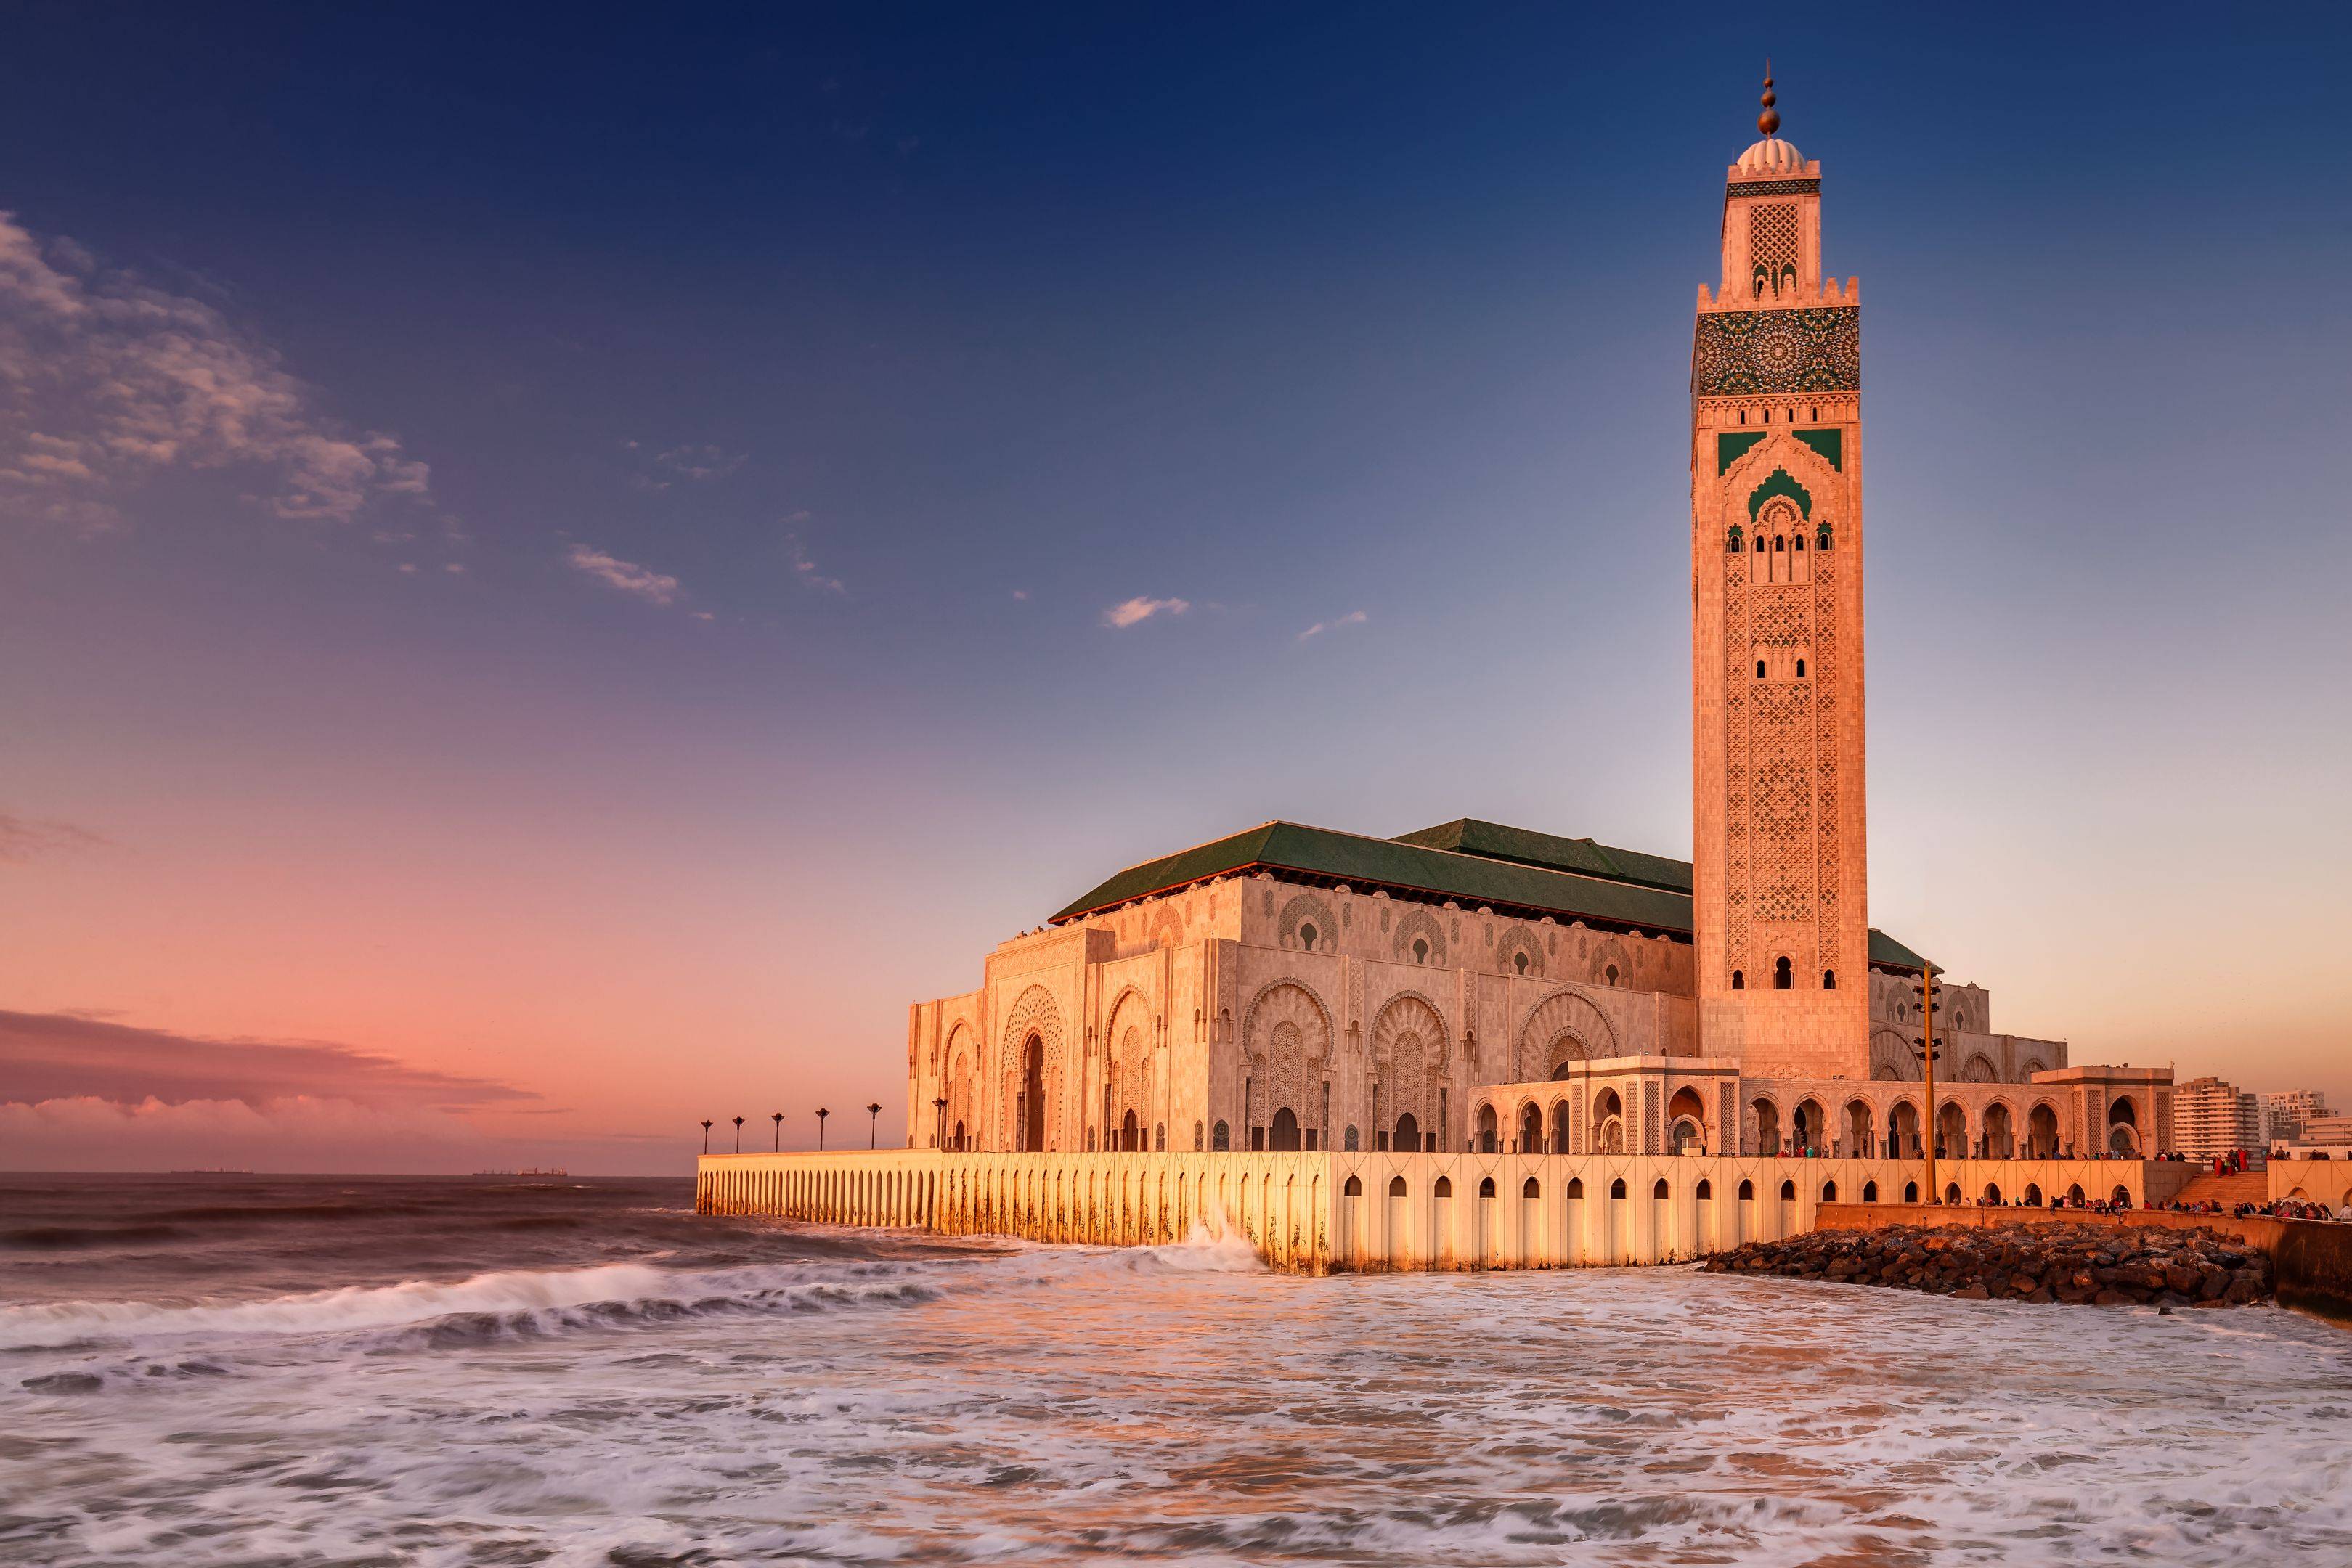 Partenza da Marrakech per Casablanca fino a Rabat